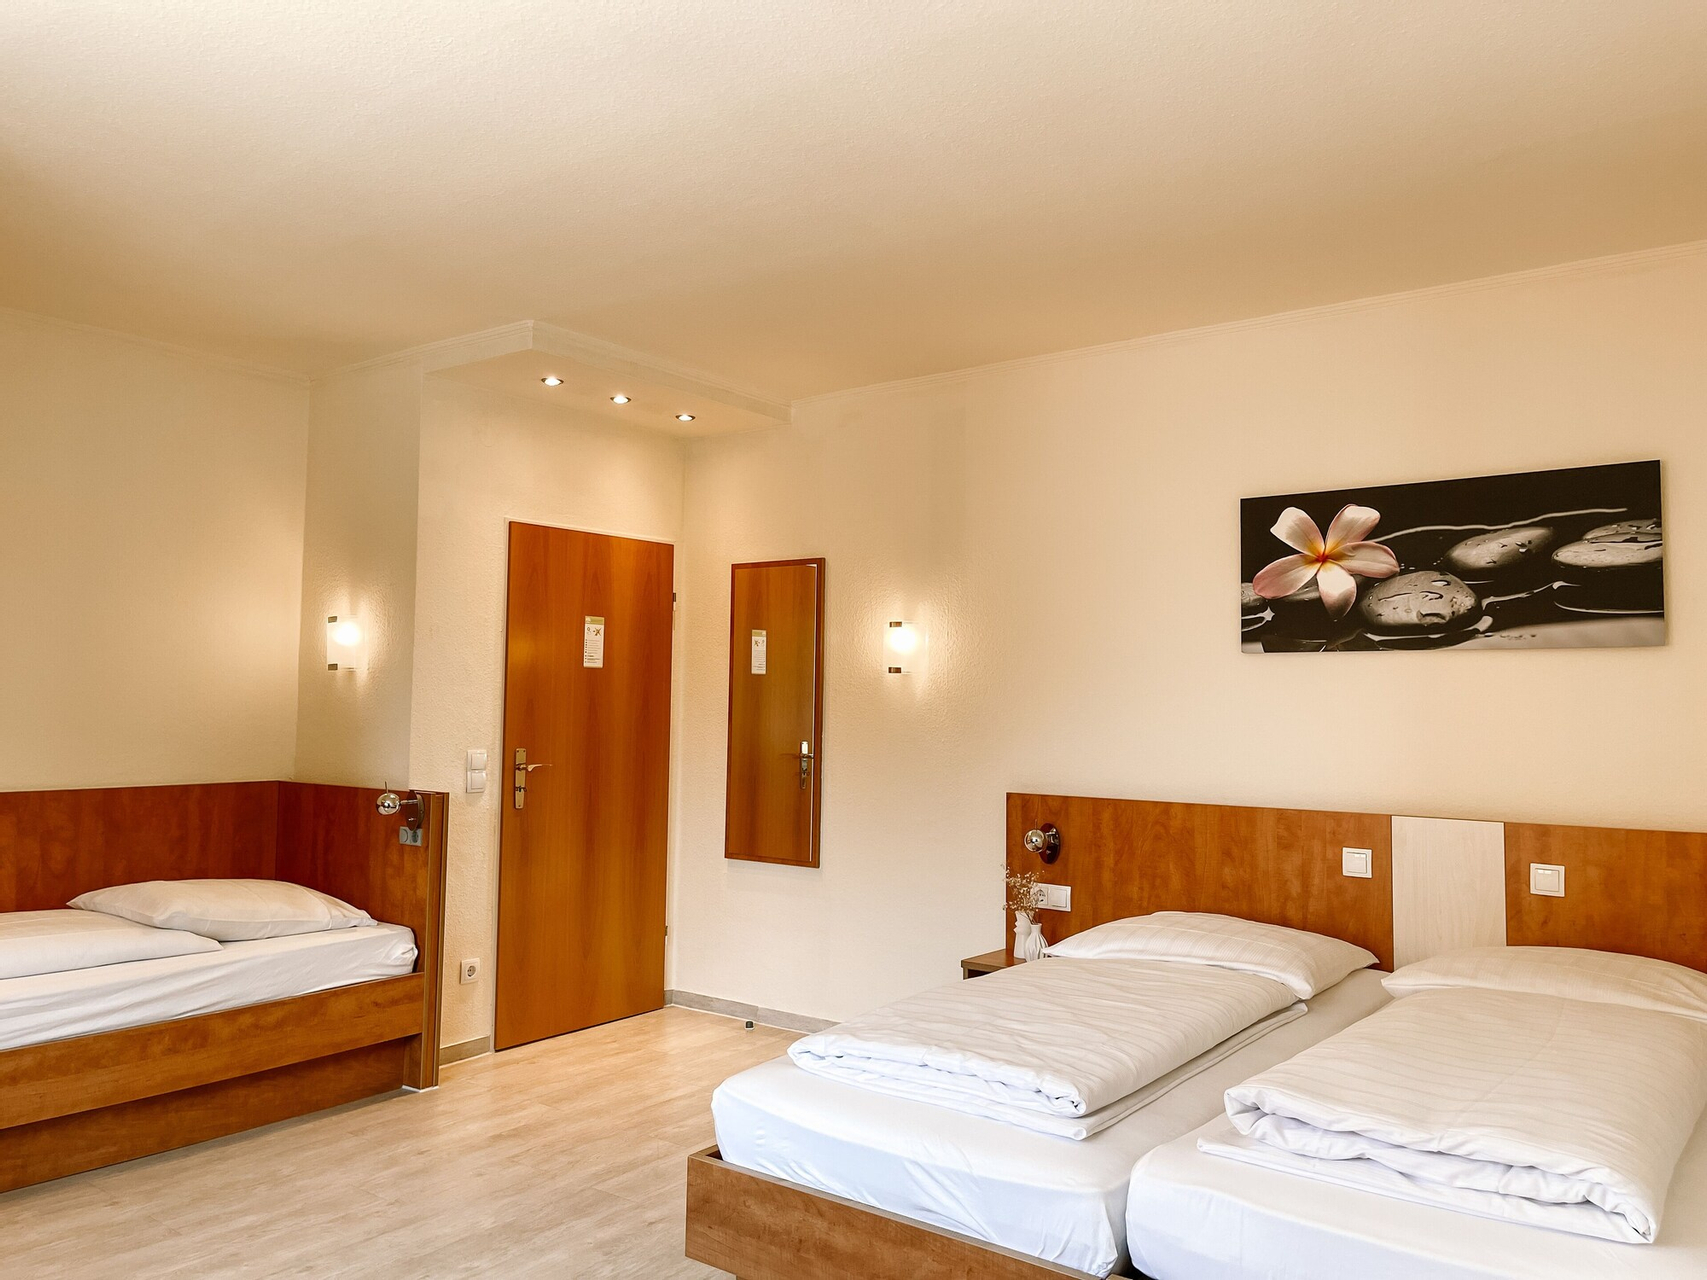 Bedroom 2, Hotel Falk, Bremen